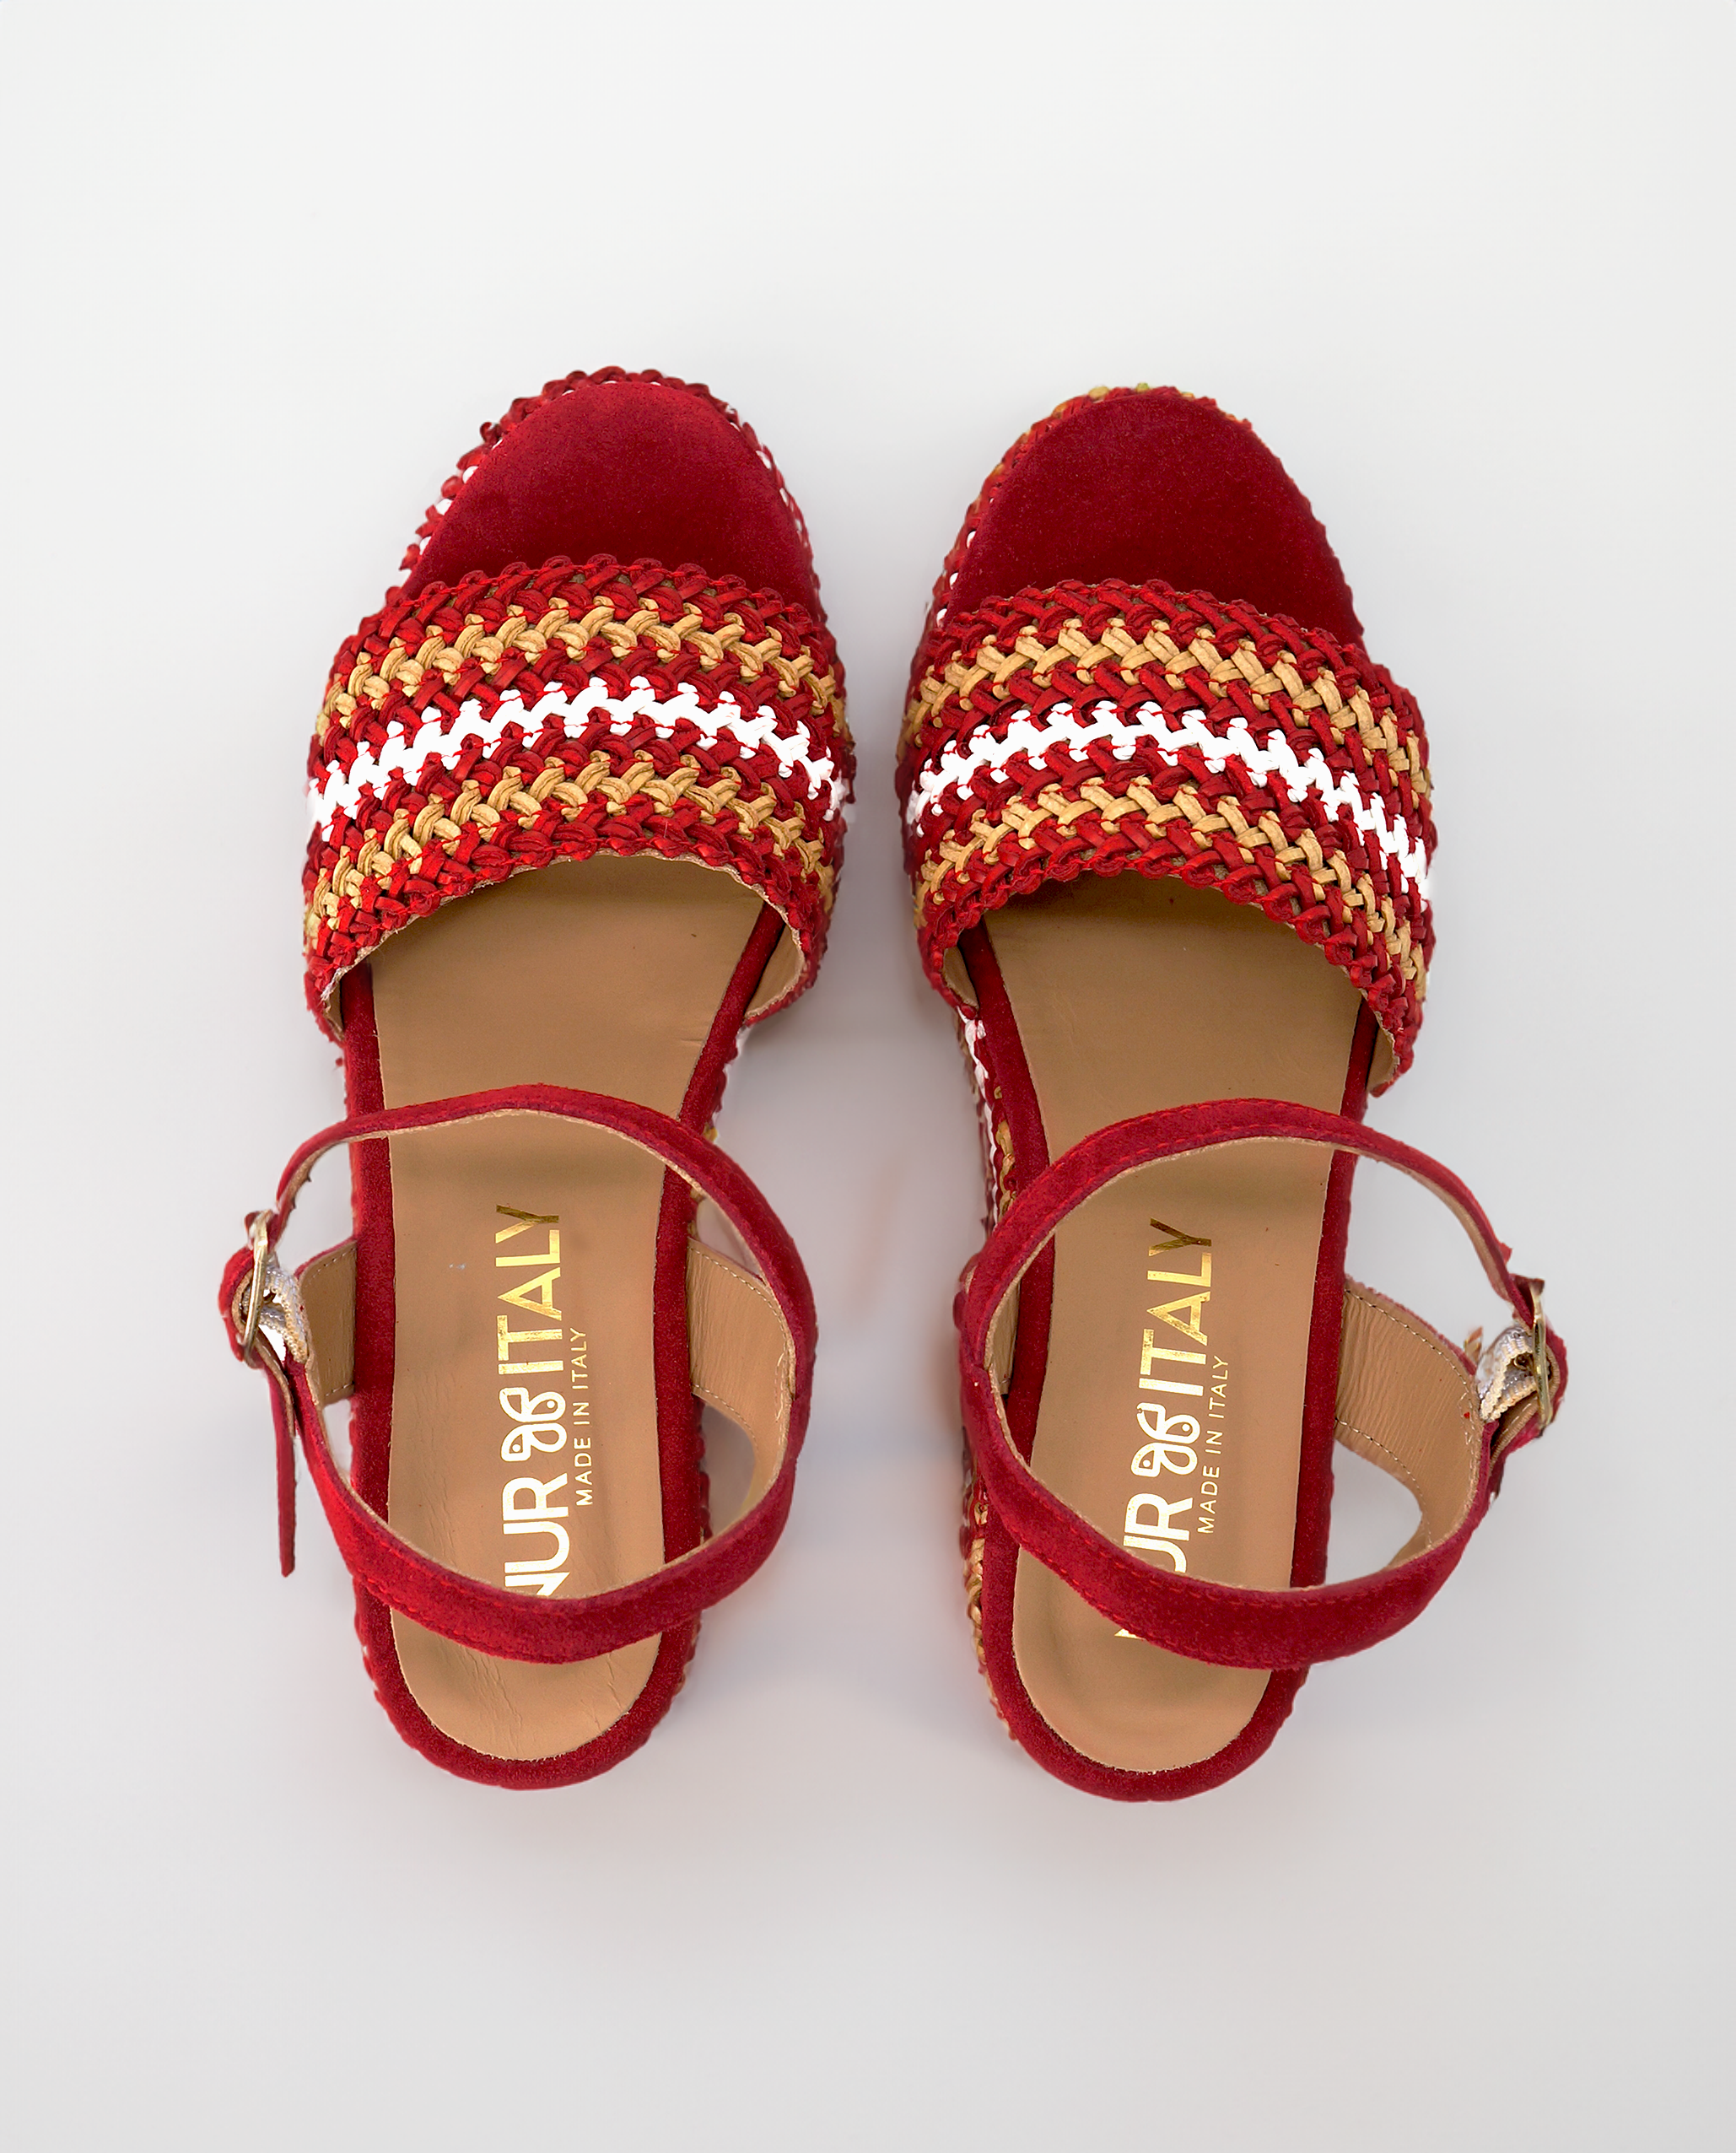 NUR ITALY Chiara Raffia Wedge Sandal, Main, color, RED